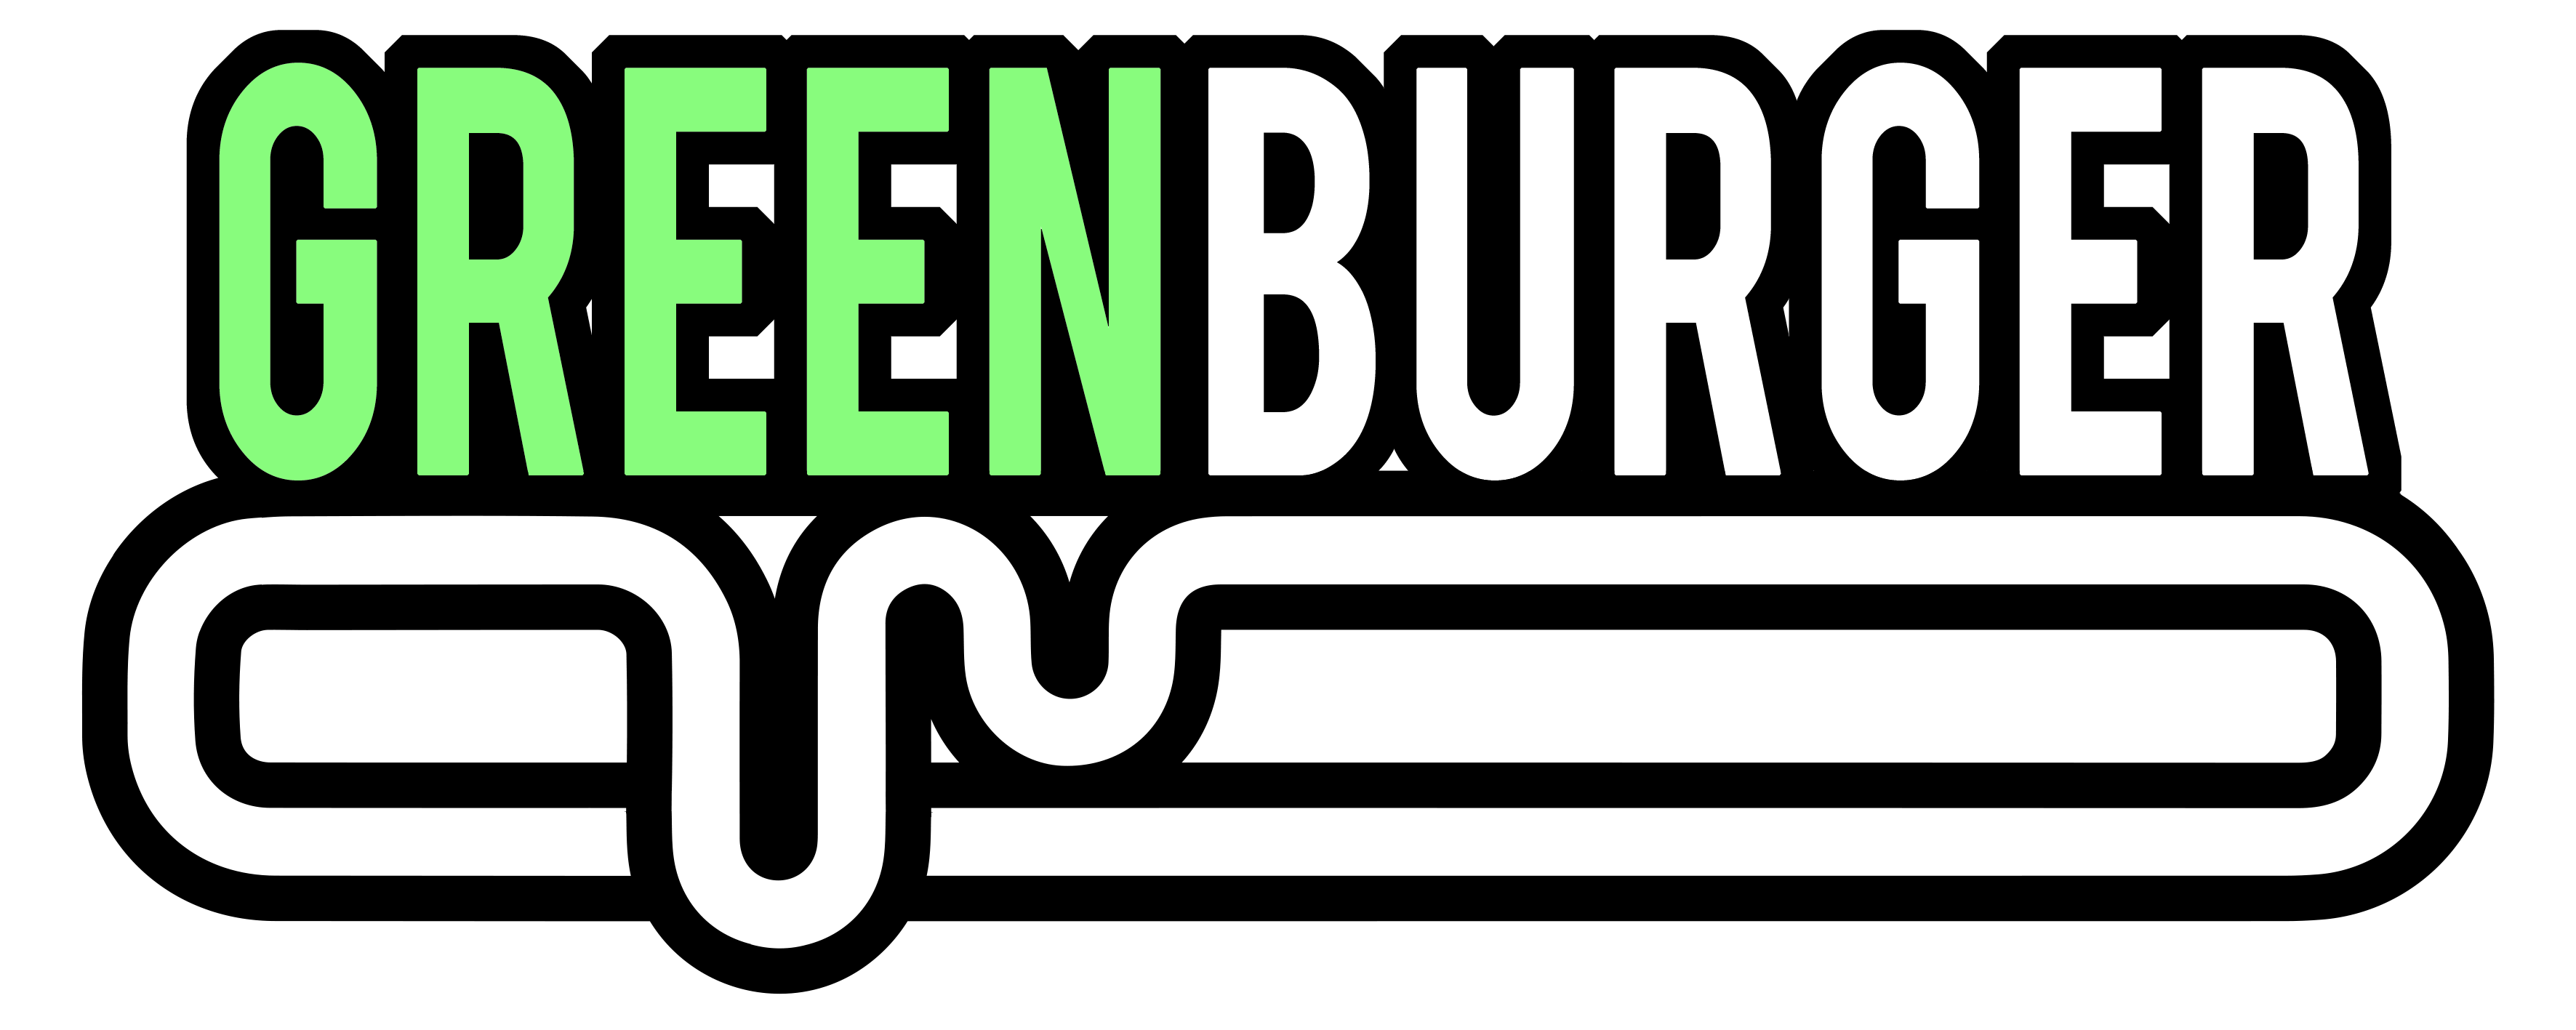 Greenburger Logo - Green Burger